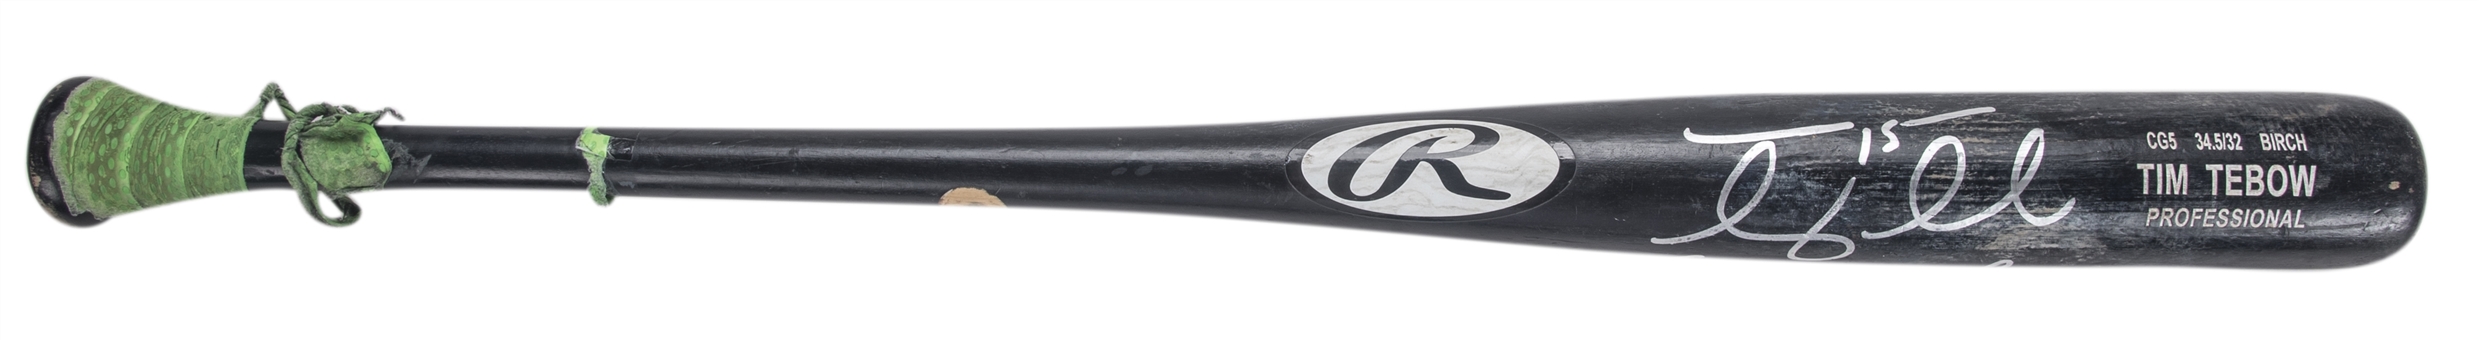 2017 Tim Tebow Game Used & Signed Rawlings CG5 Model Bat (PSA/DNA GU 10 & JSA)